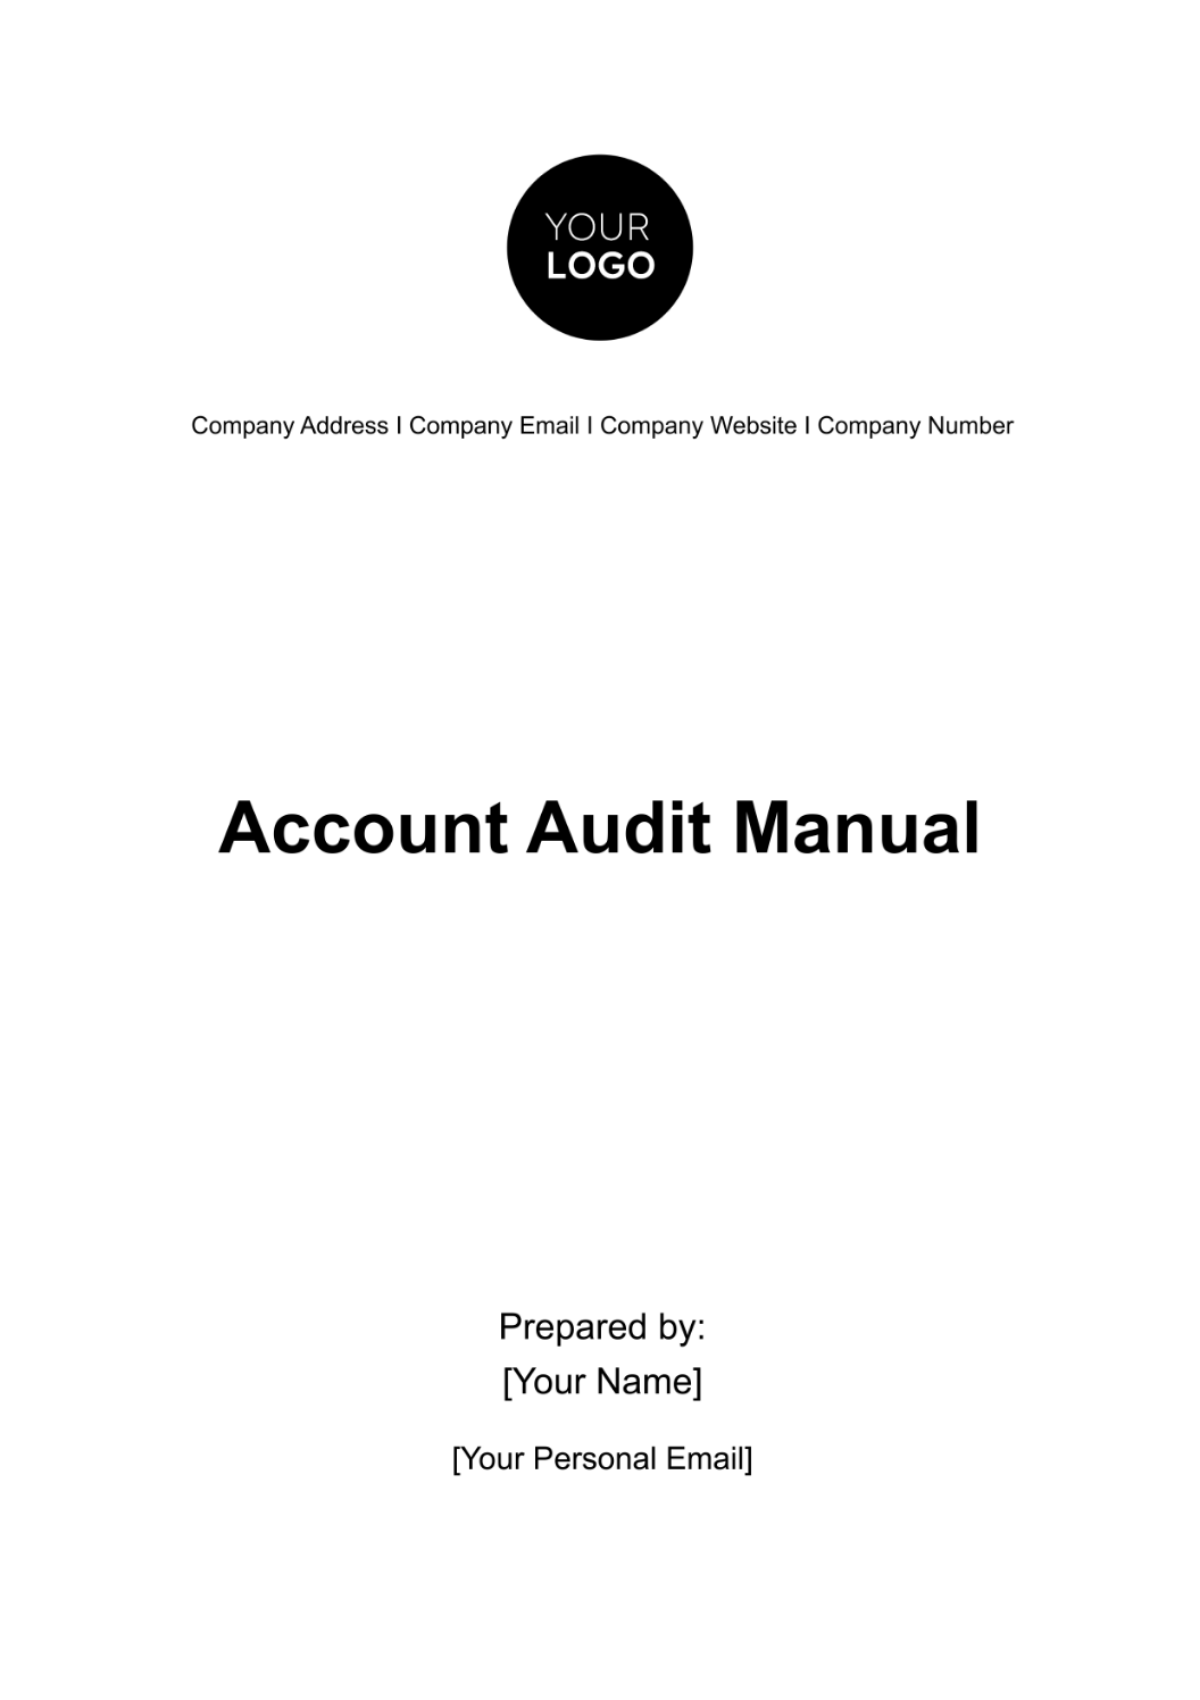 Account Audit Manual Template